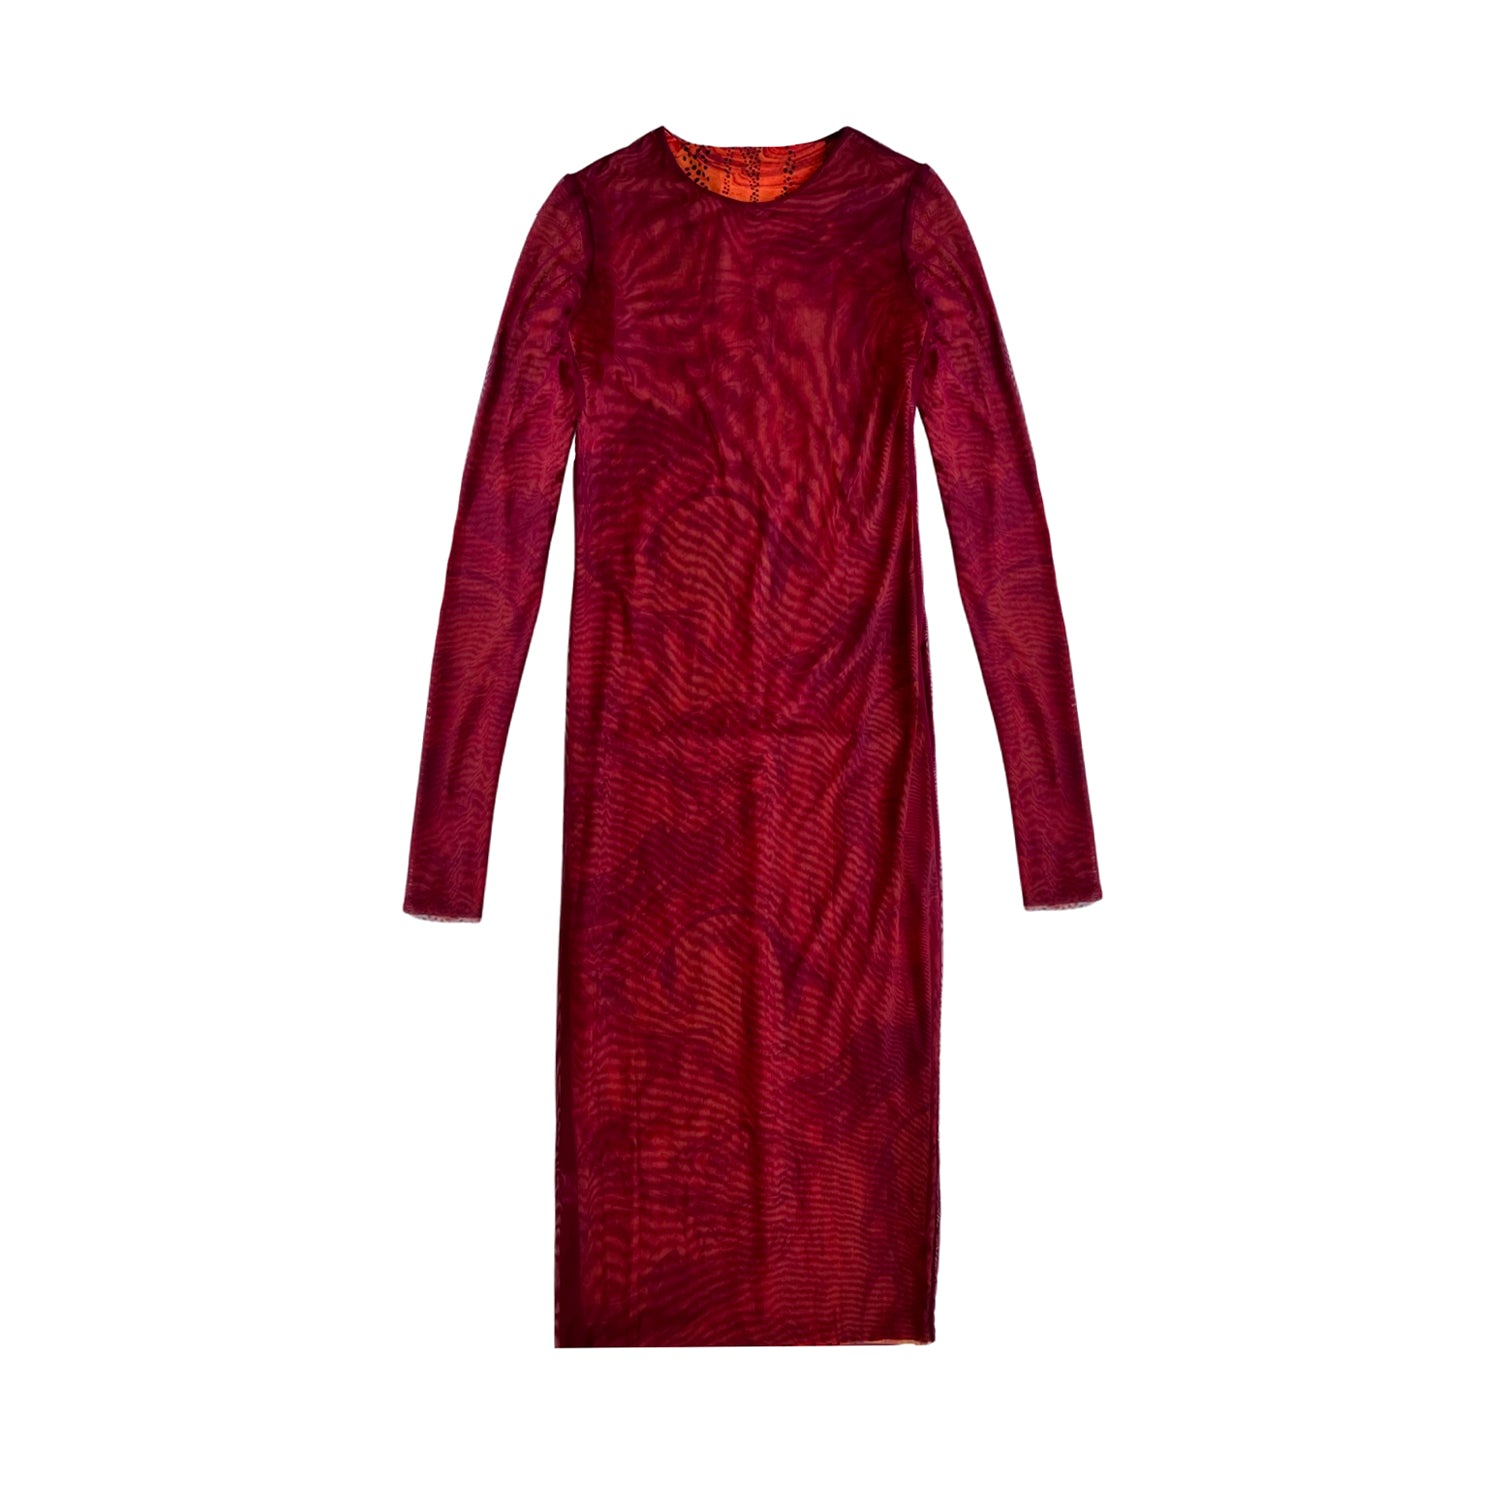 Reversible Printed Mesh Dress in Burgundy